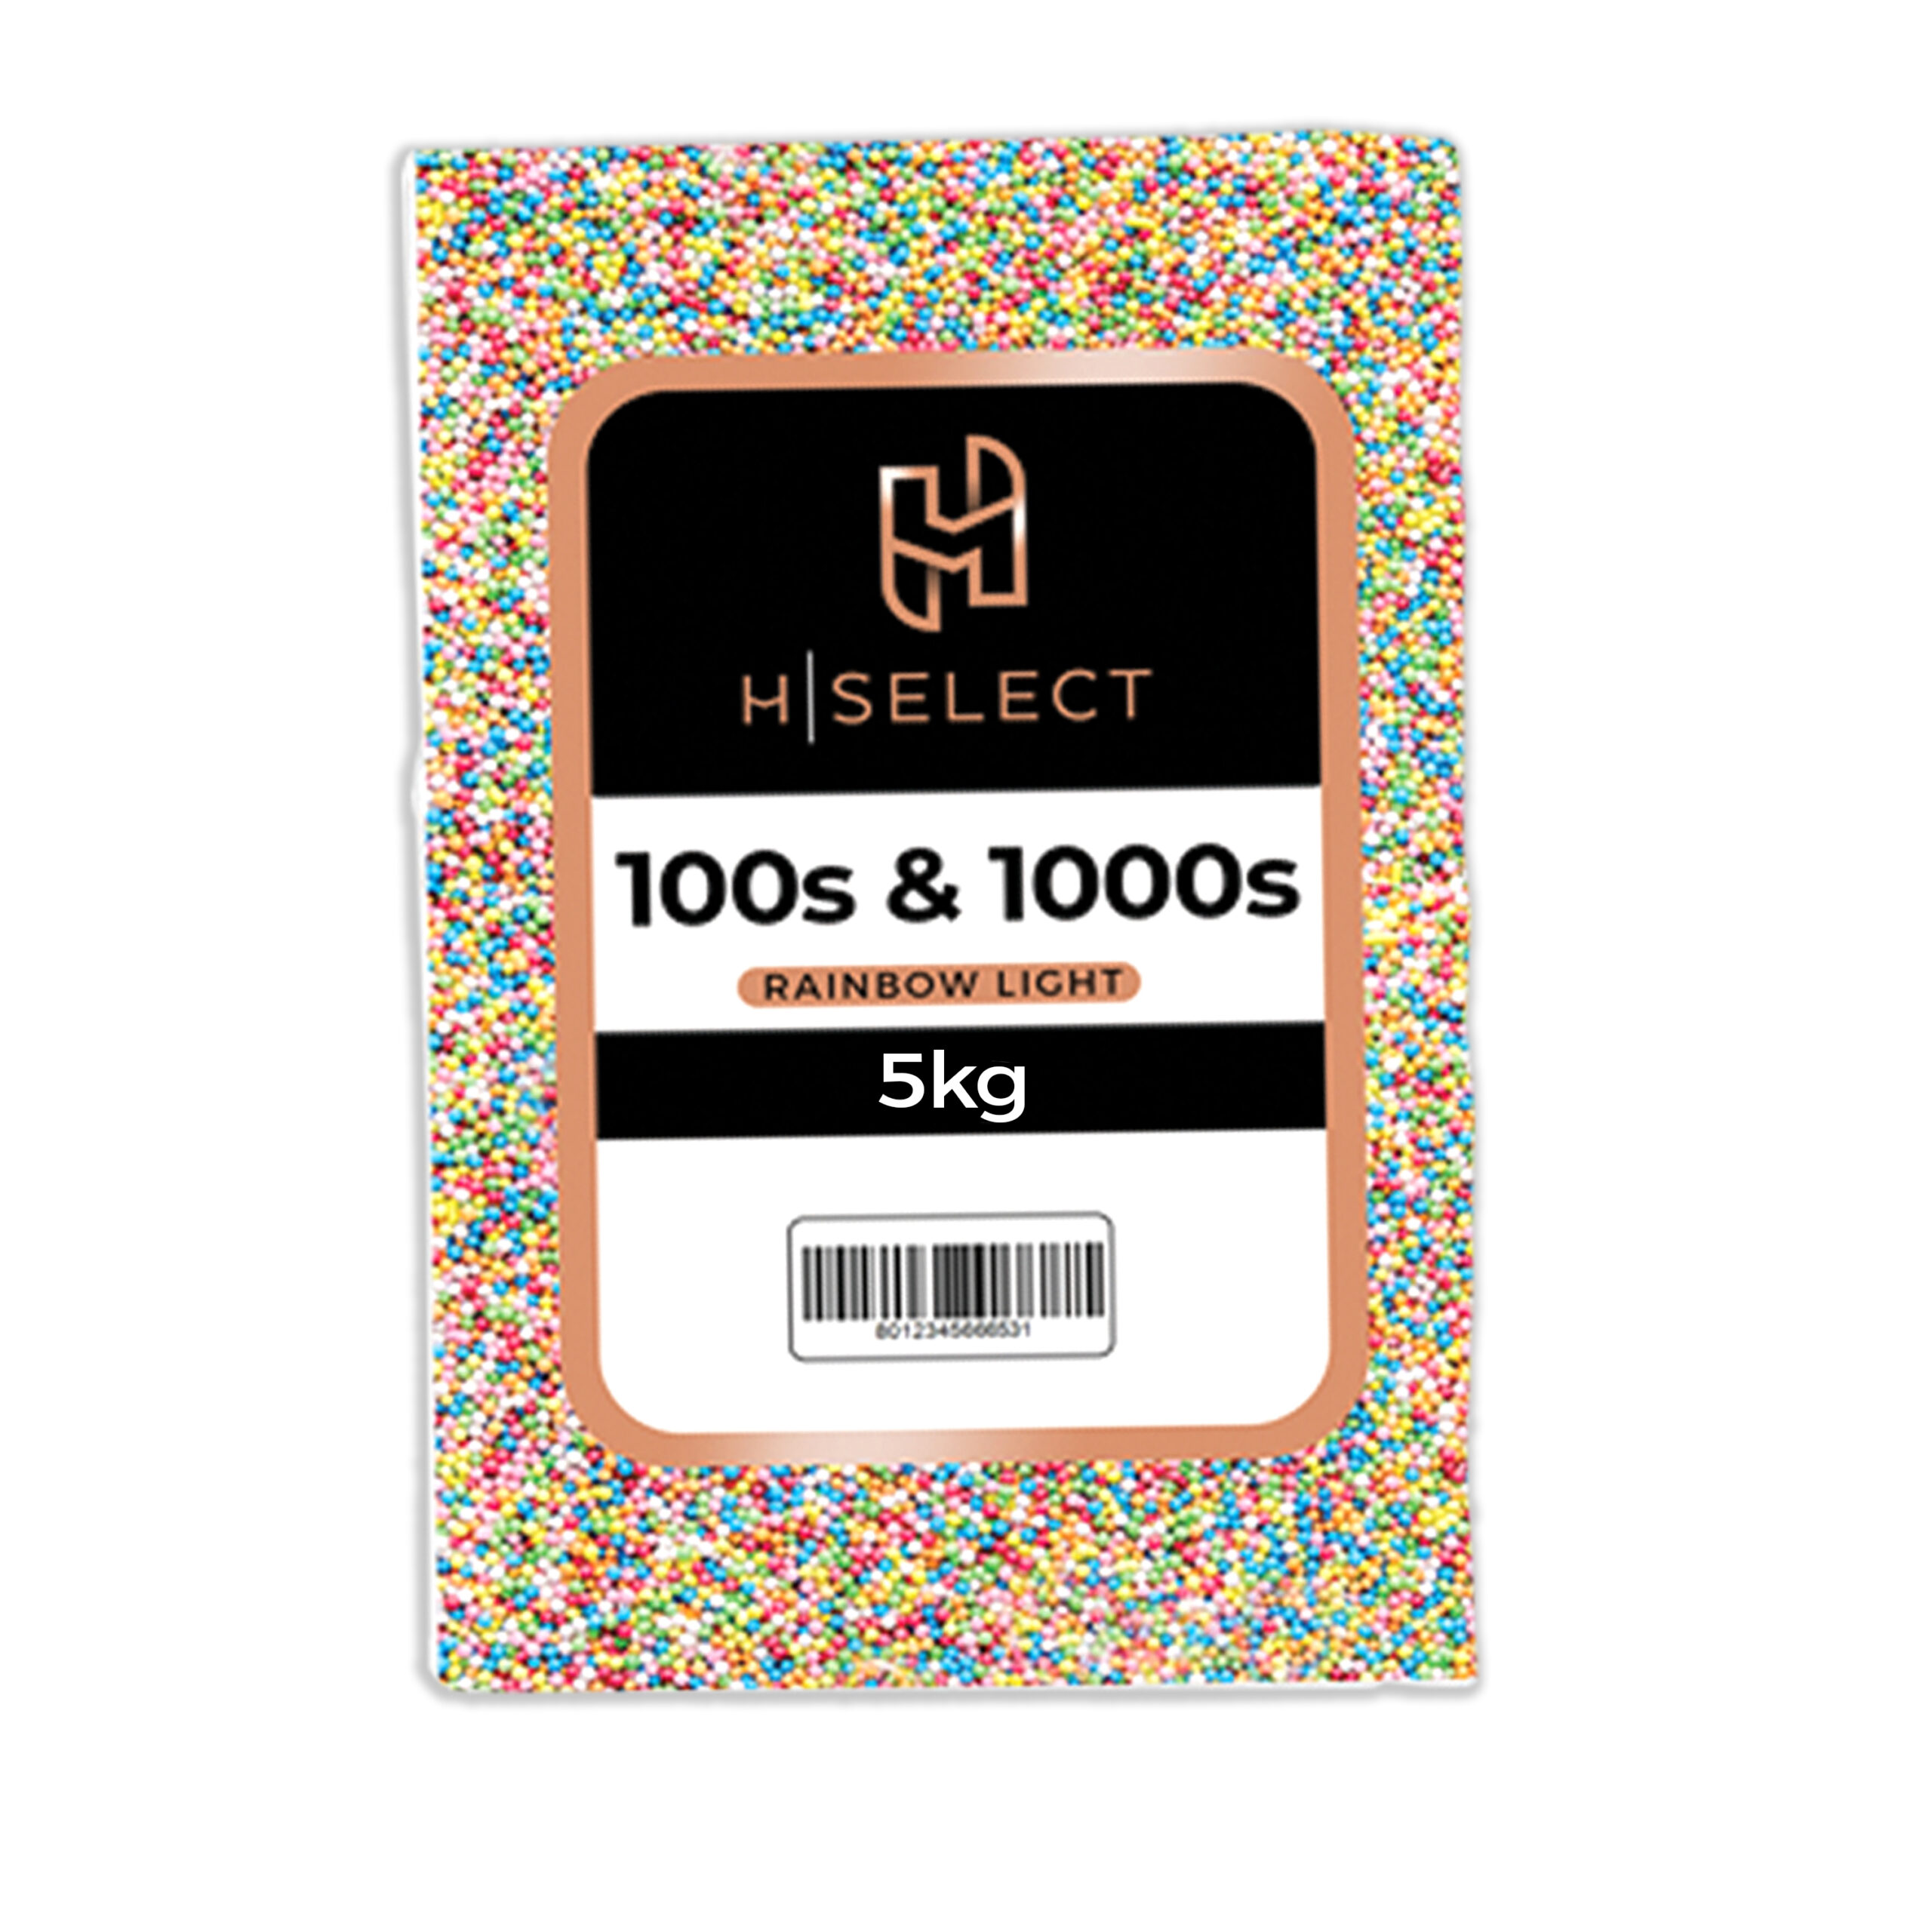 H-SELECT 100s &
1000s 5kg
RAINBOW LIGHT